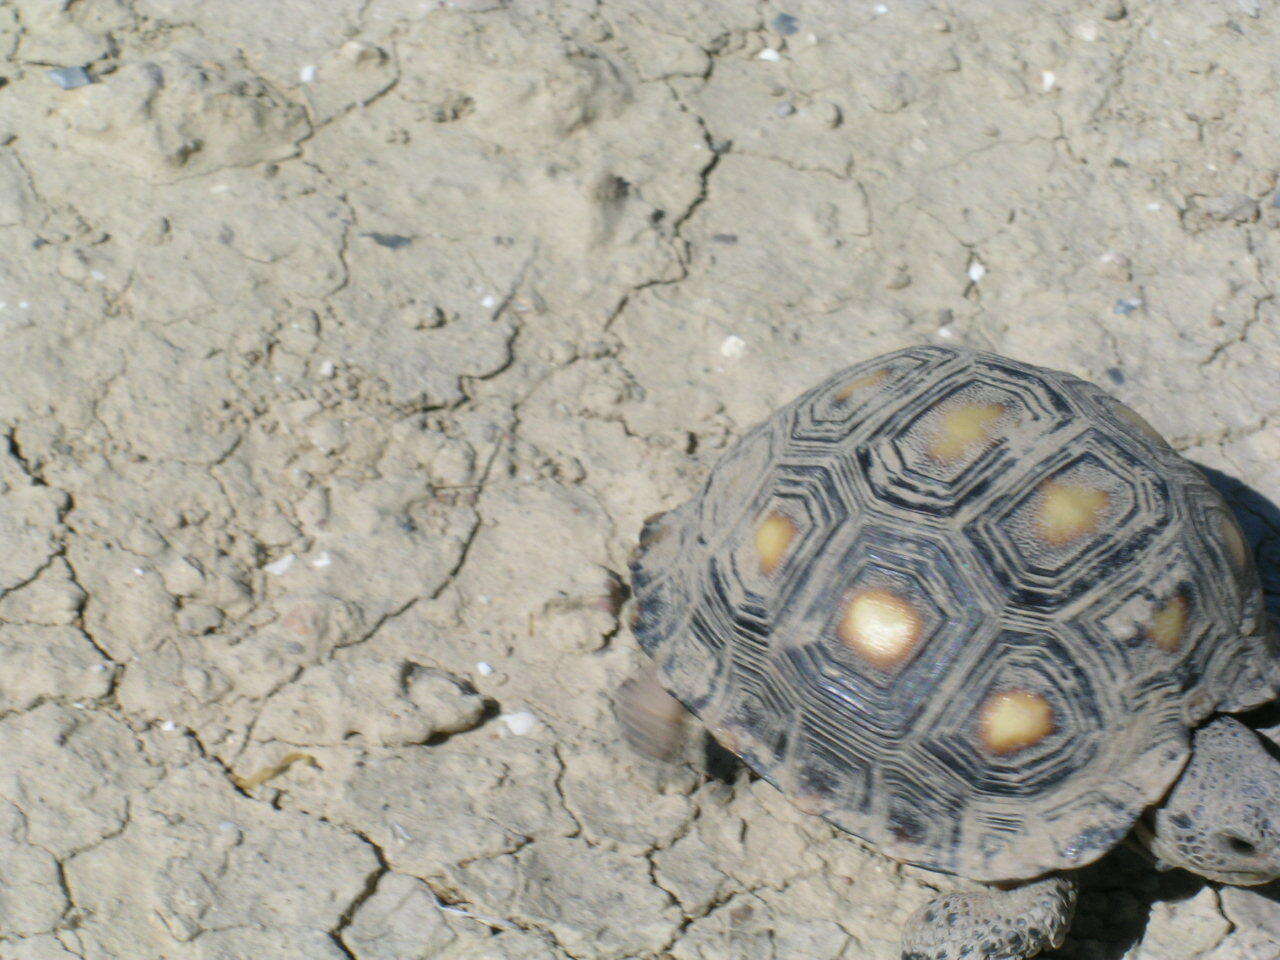 Image of Berlandier's Tortoise